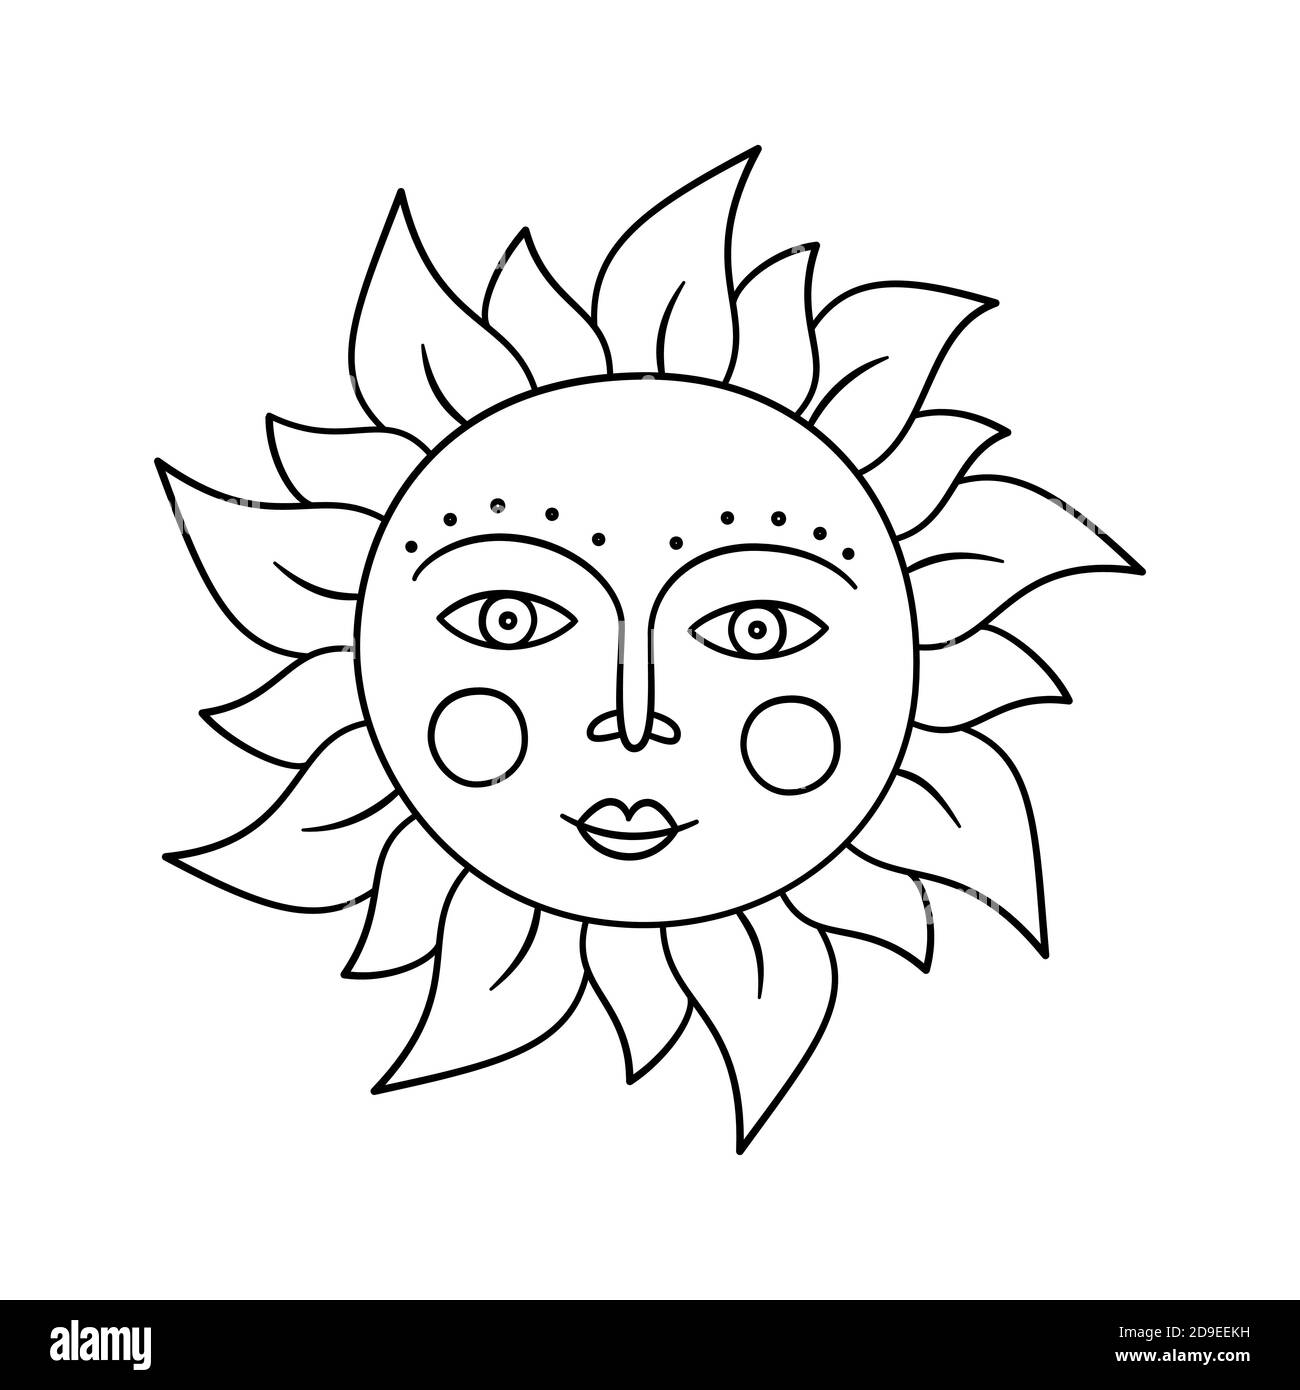 Cute sun with face in slavic folk style. Hand drawn vector illustration ...